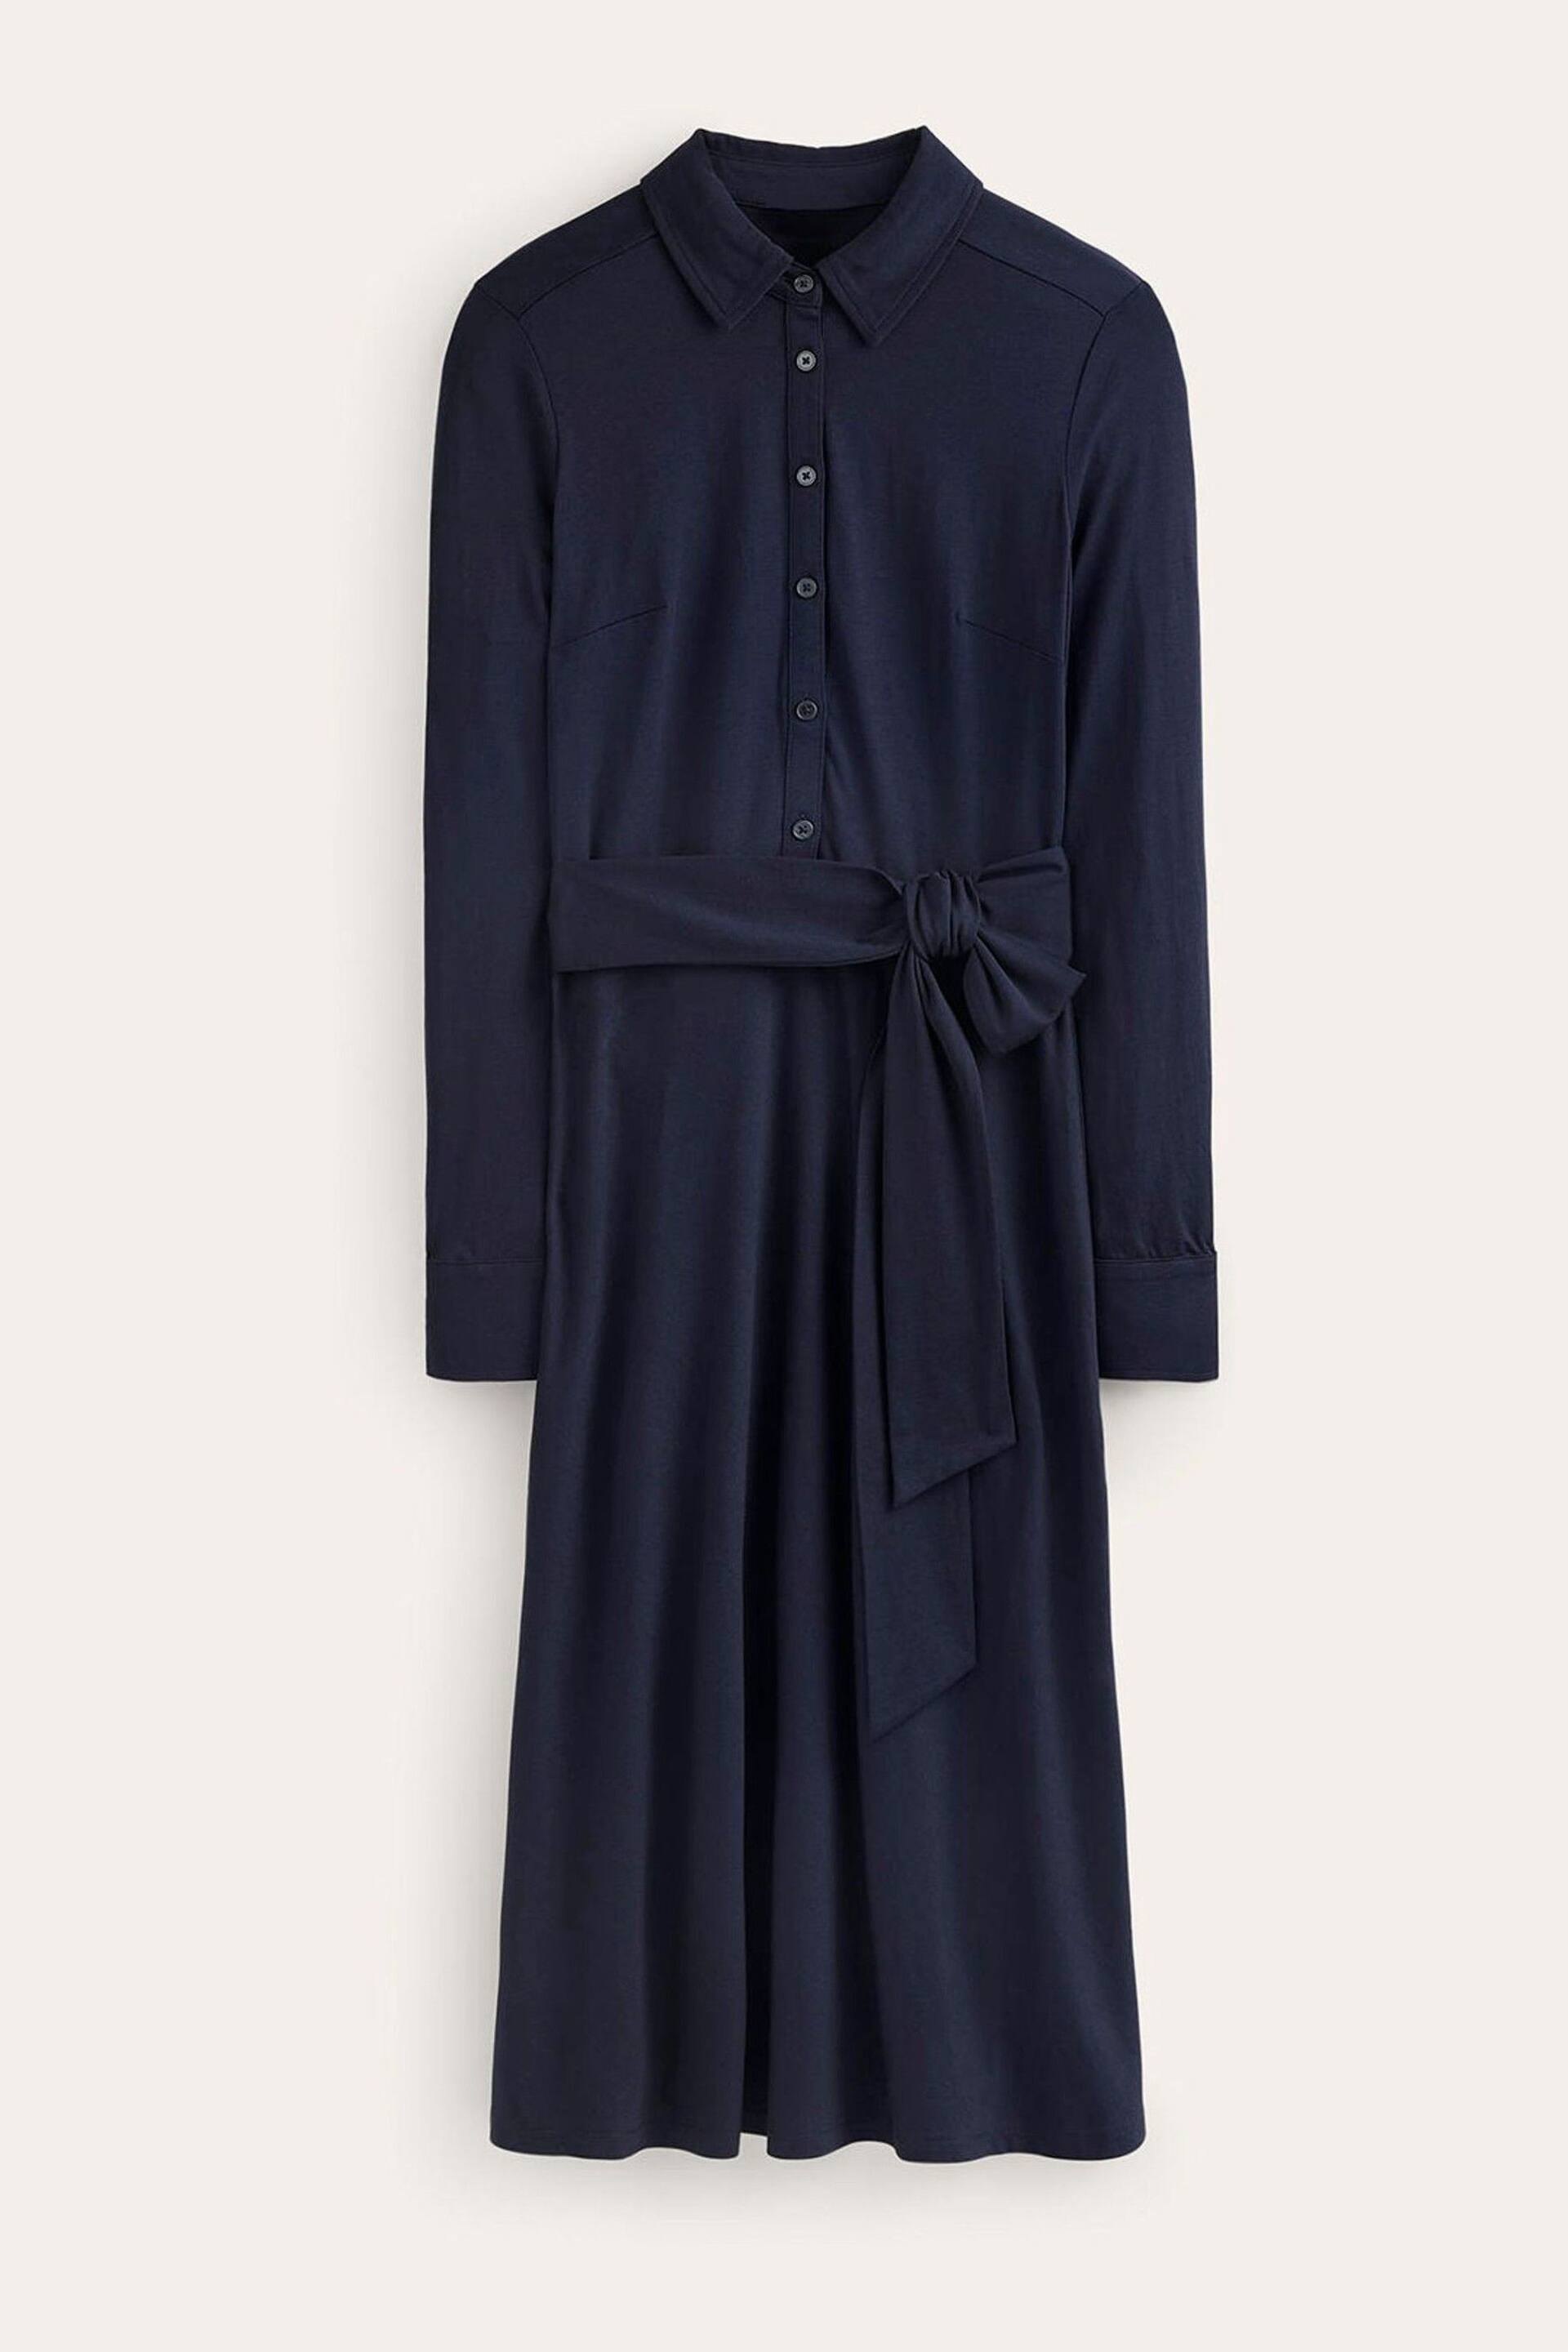 Boden Blue Laura Jersey Midi Shirt Dress - Image 5 of 5